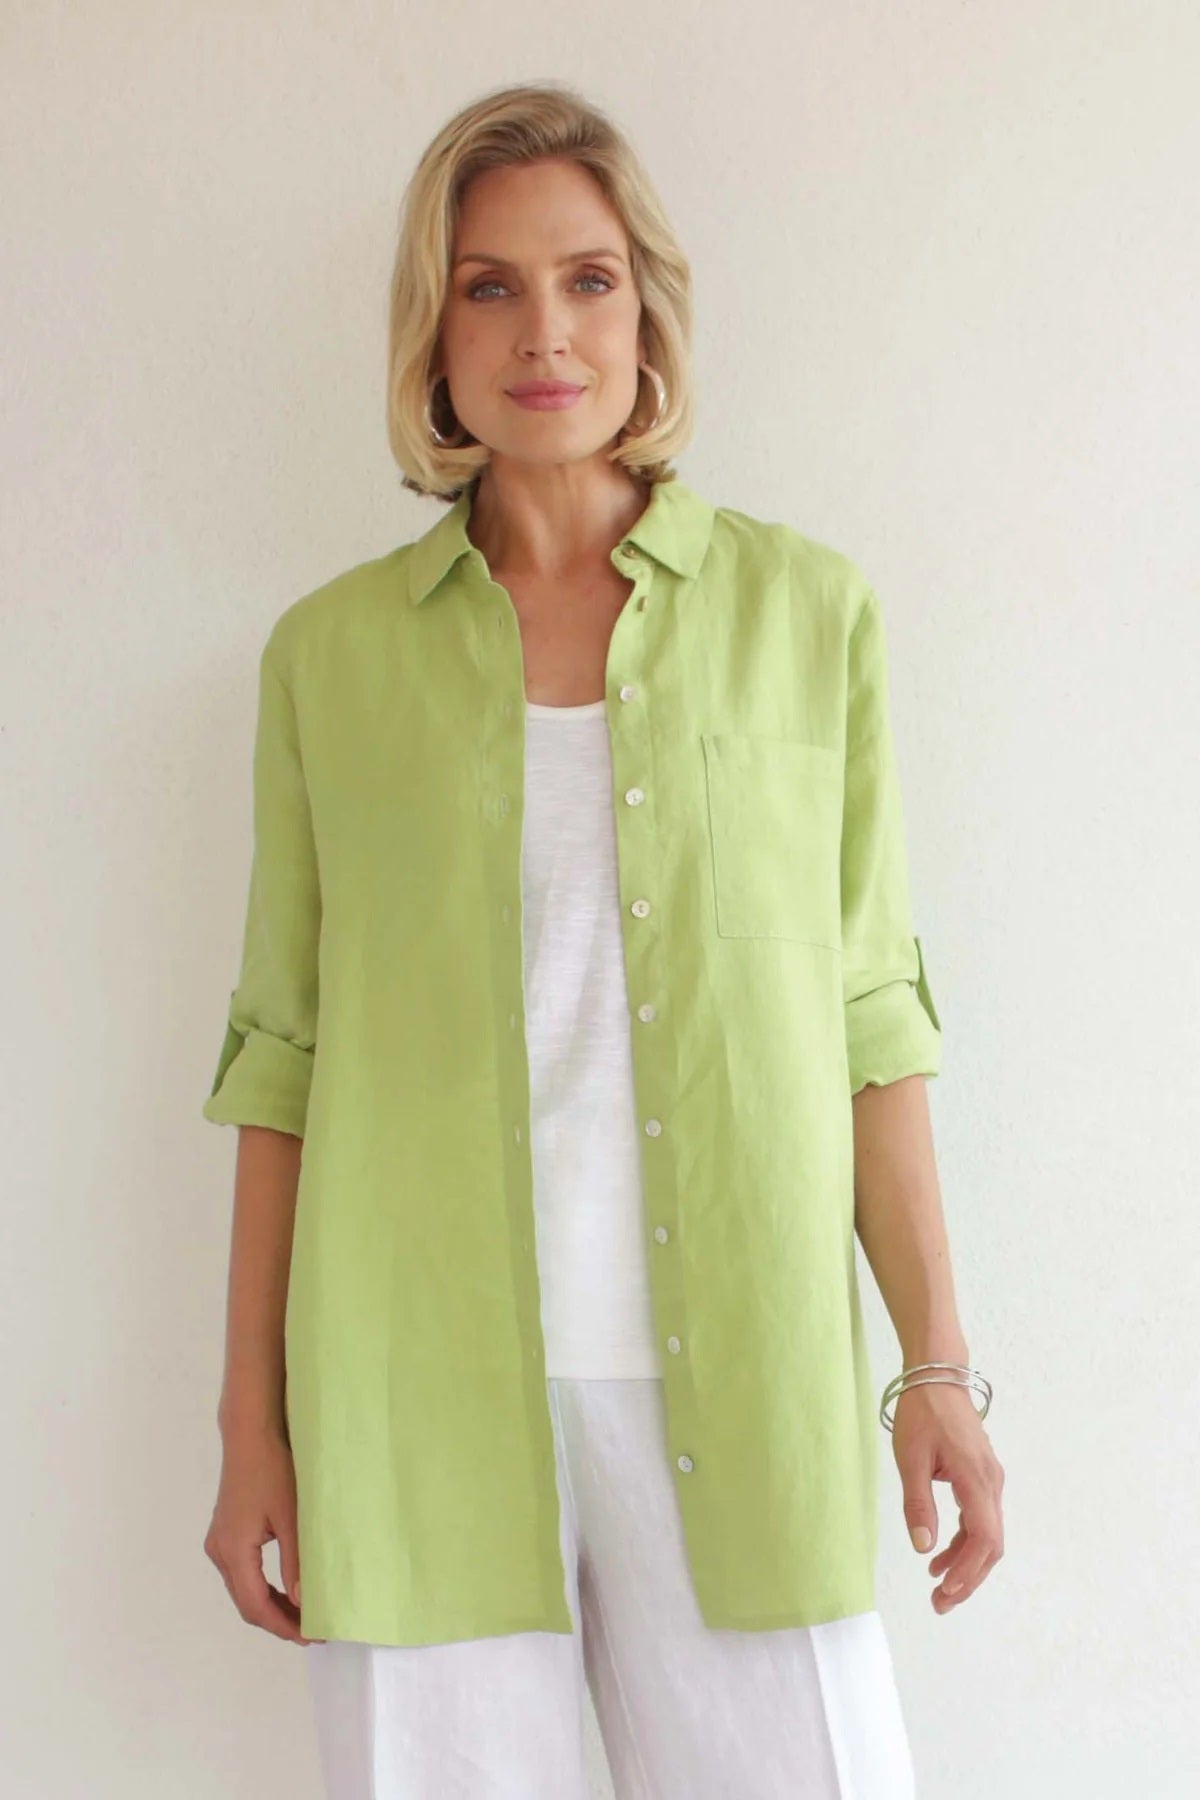 Pomodoro Linen Shirt - Lime